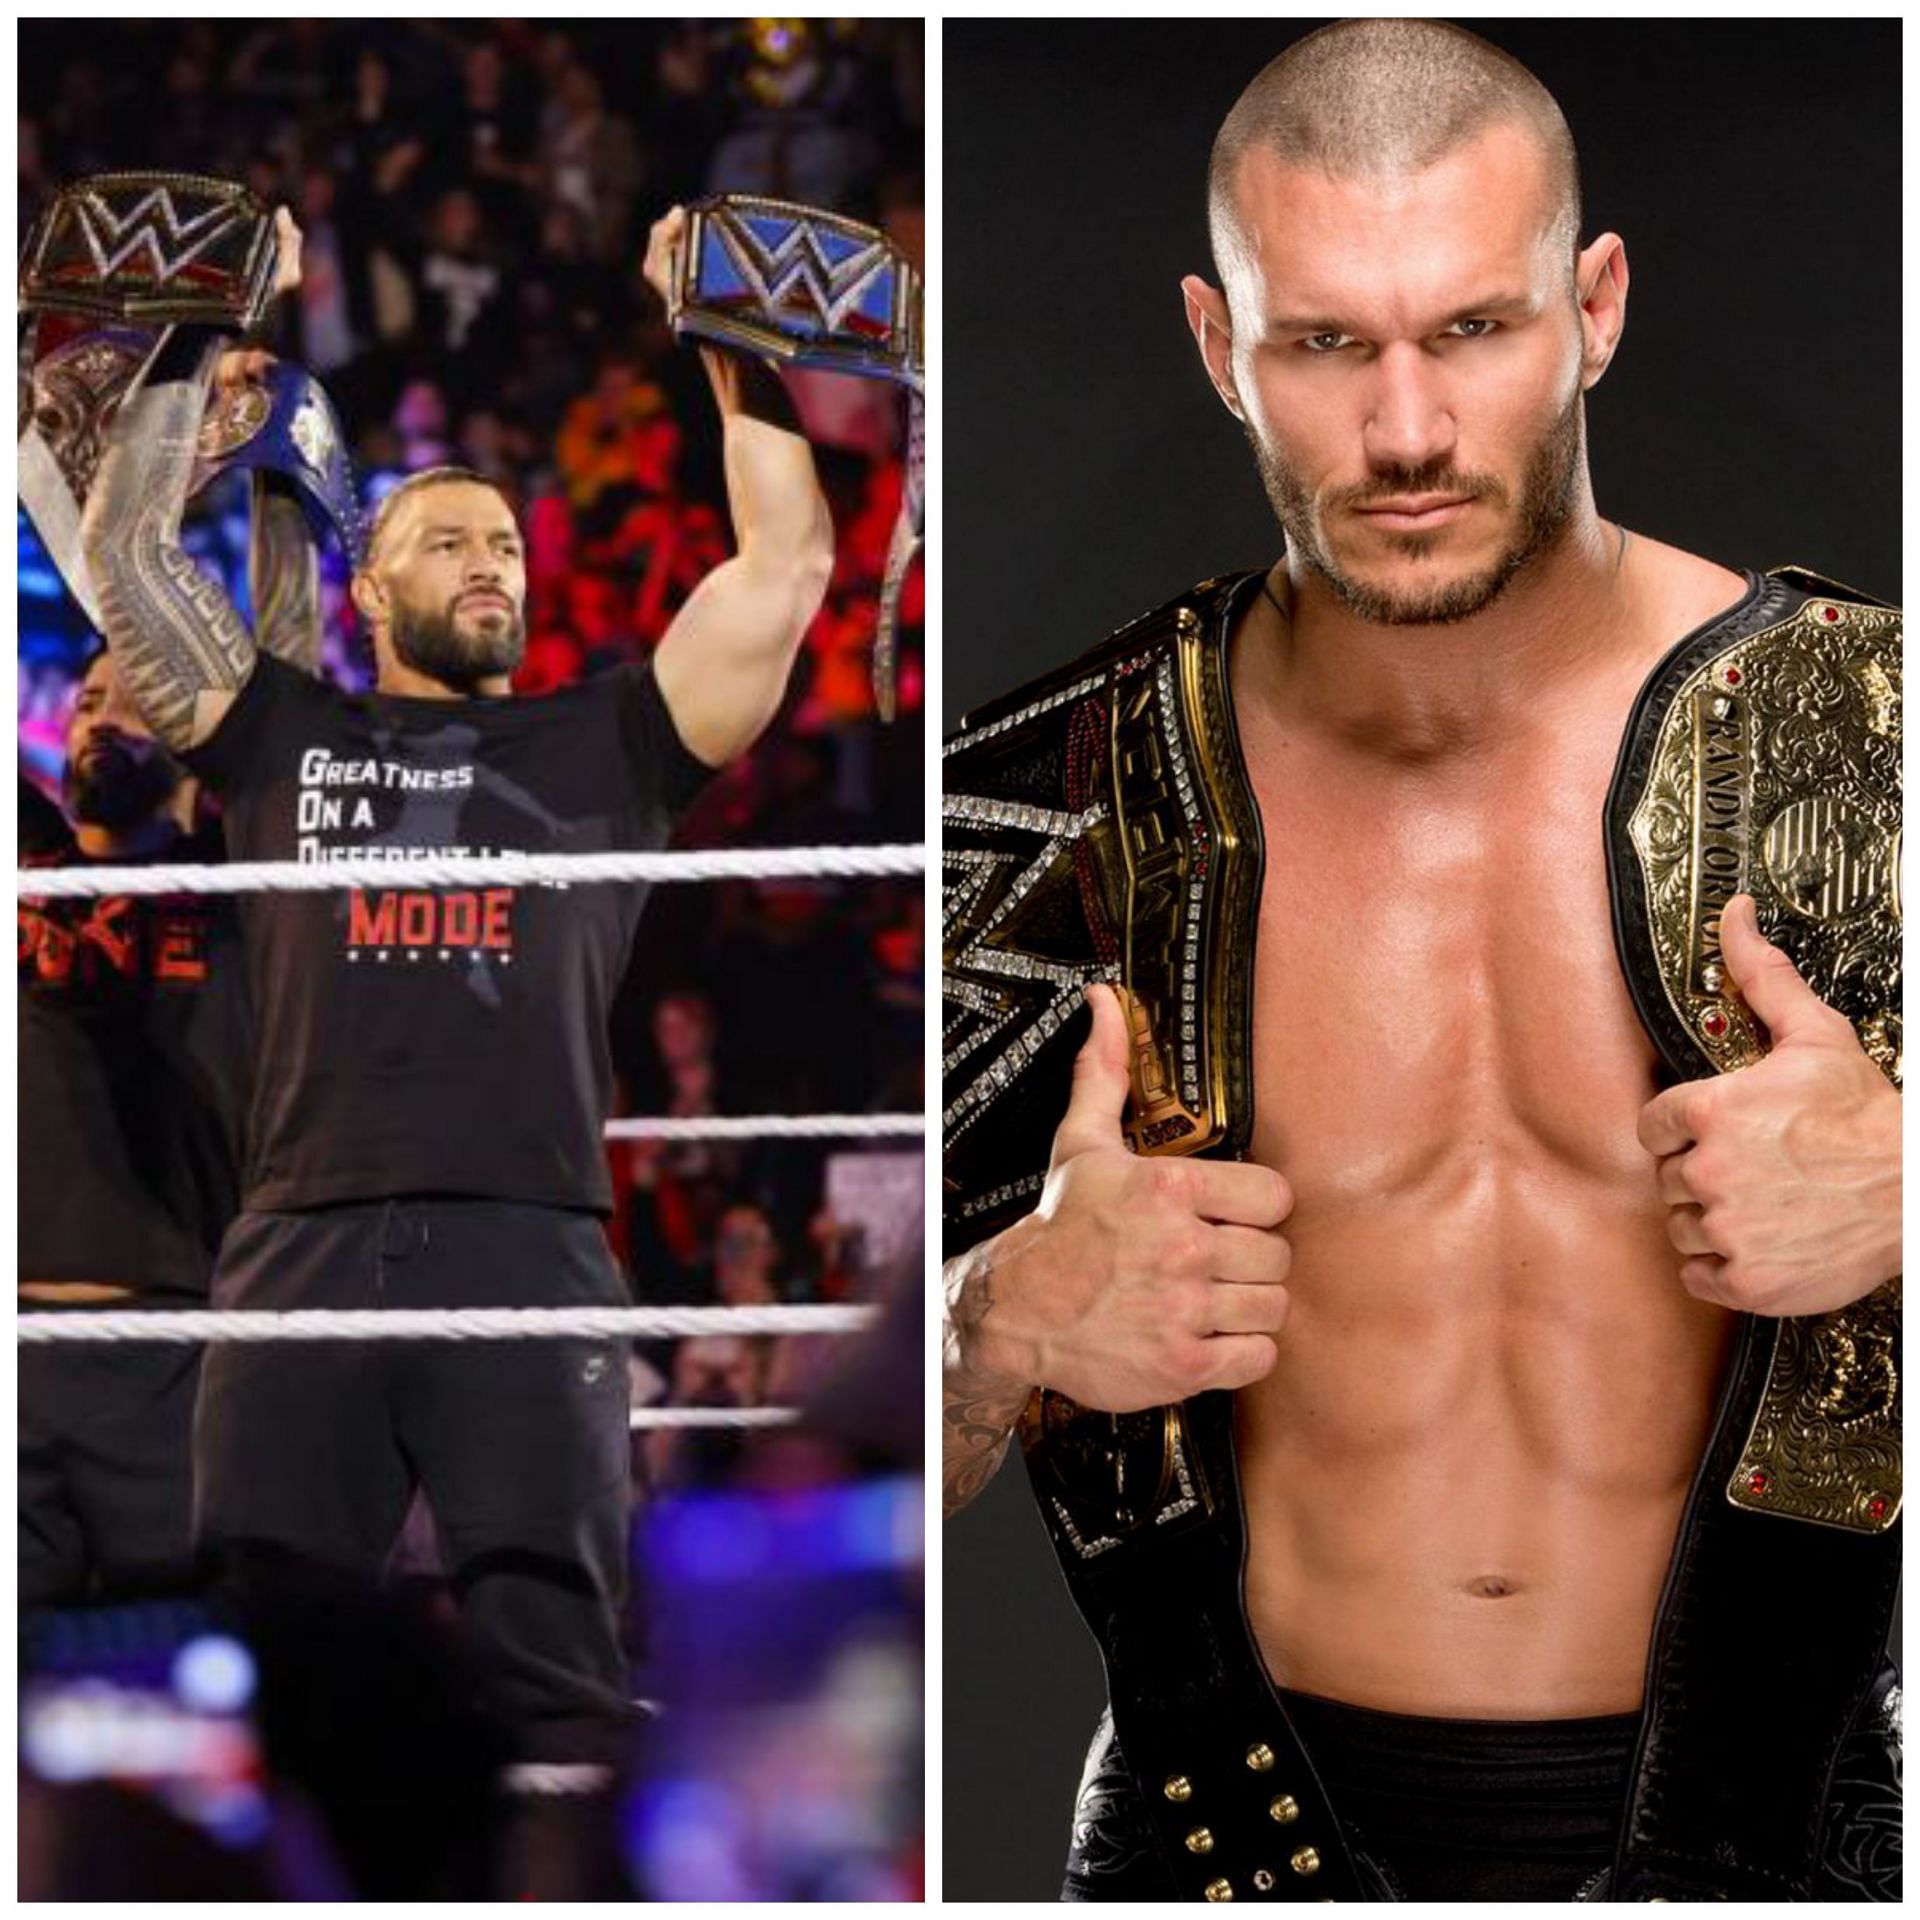 Reigns vs. Orton is a money feud